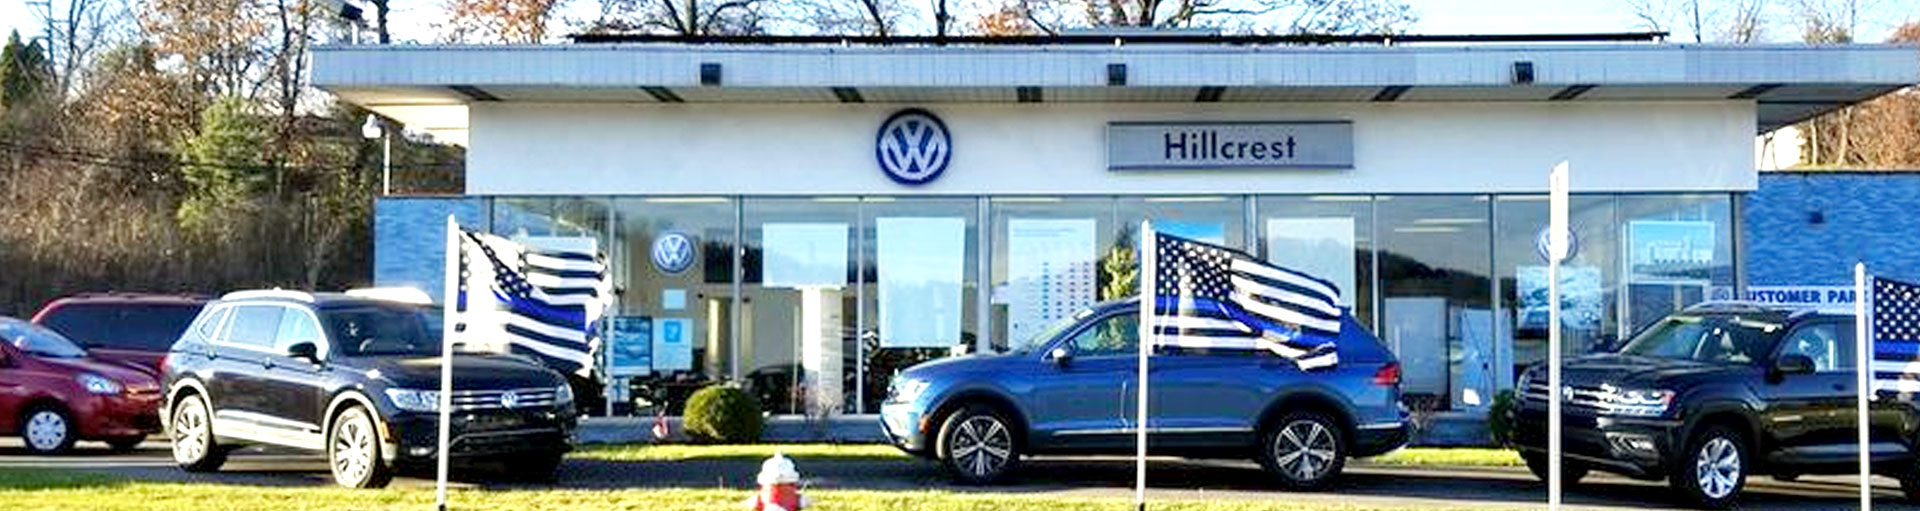 Hillcrest Volkswagen Multi-Point Inspection Service